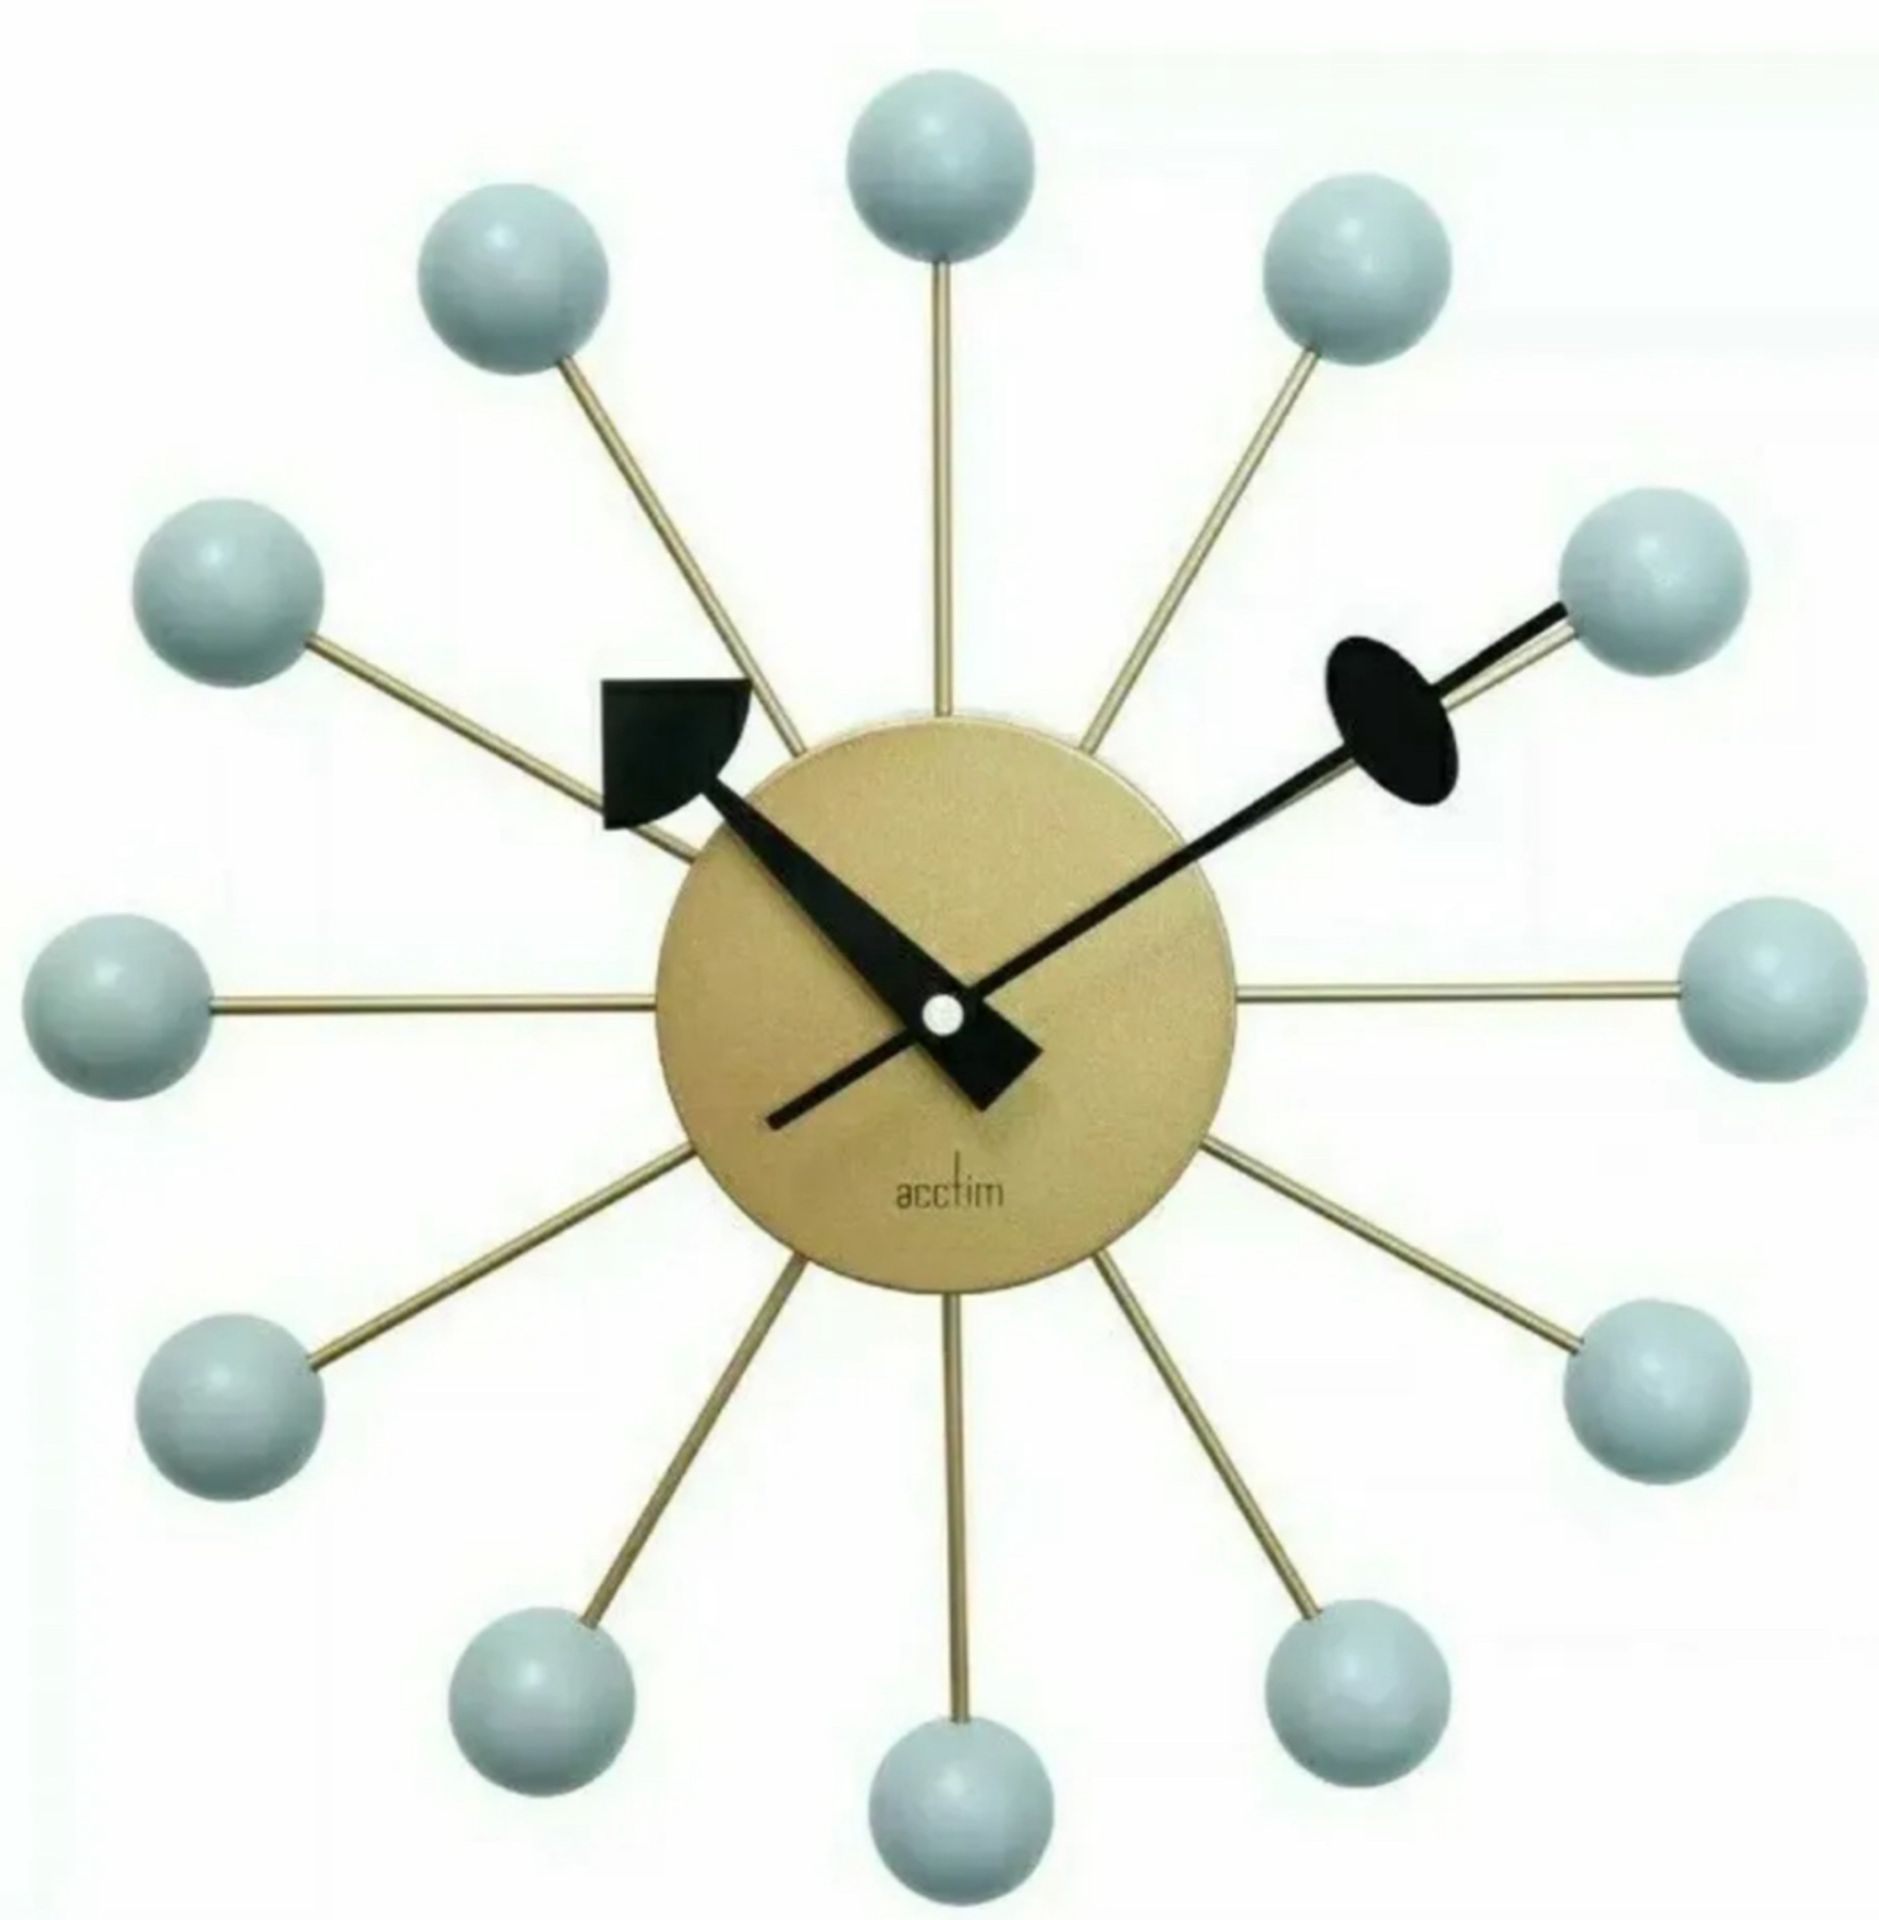 33cm Wall Spoke Clock in Brass Haze by Acctim - BRAND NEW - RRP Â£30+ - NO VAT!